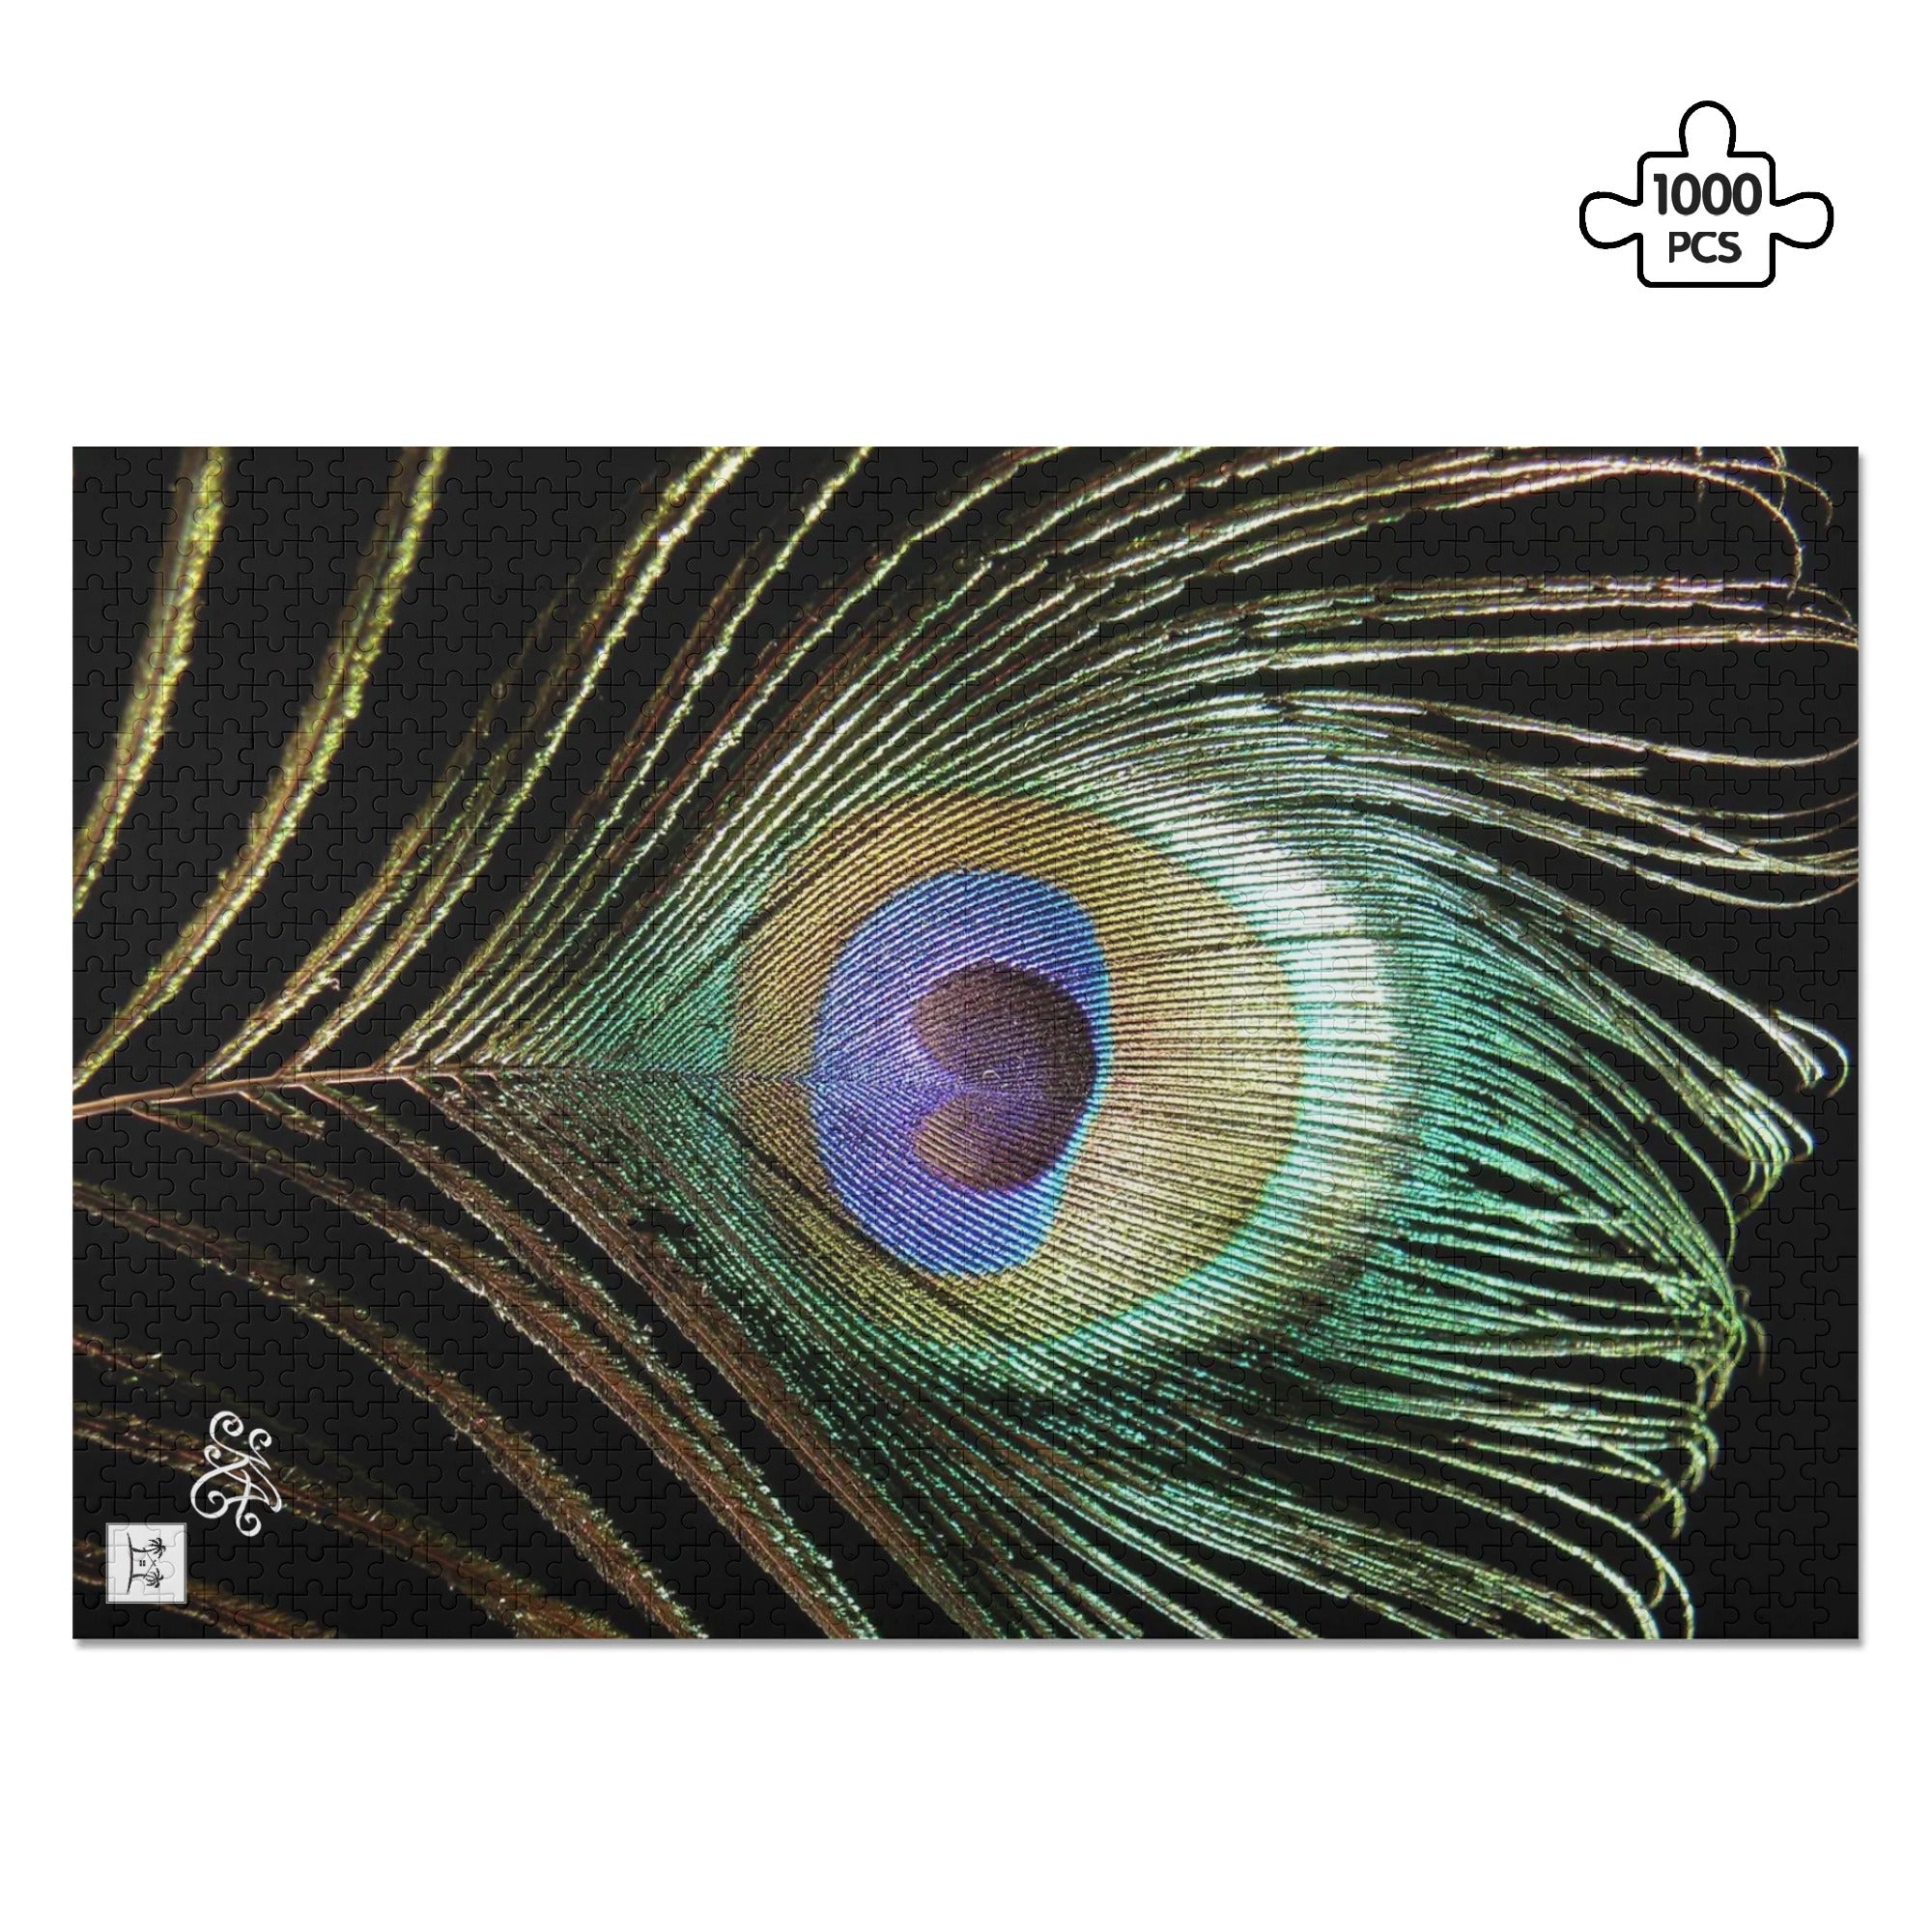 Wooden Jigsaw Puzzle (1000 Pcs) - Sapphire Eye